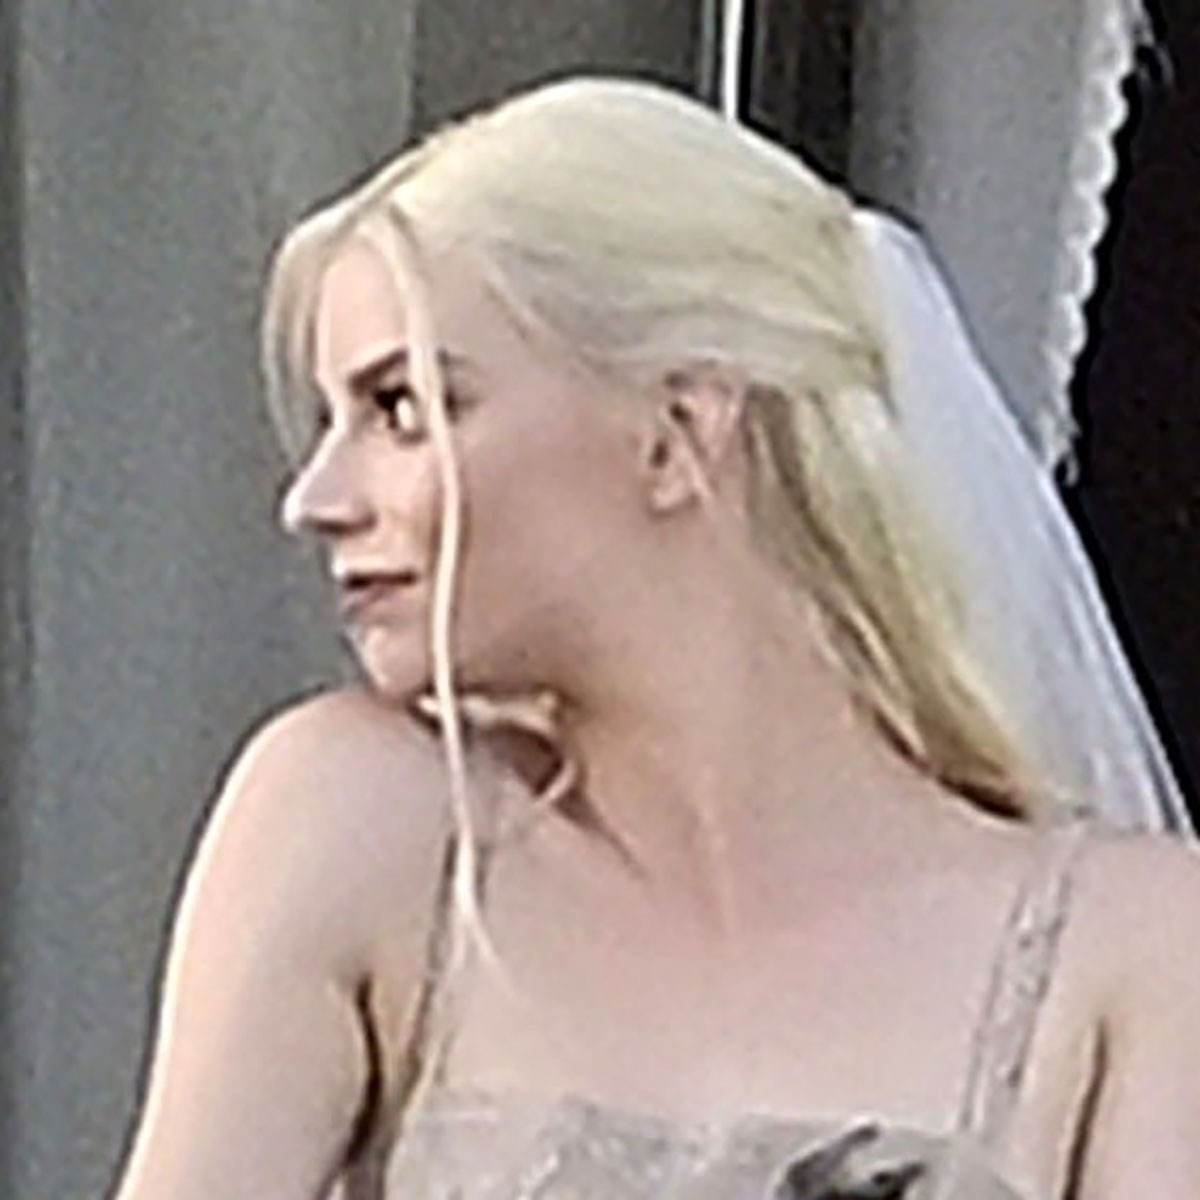 Anya Taylor-Joy Weds Malcom McRae In Beige Wedding Dress